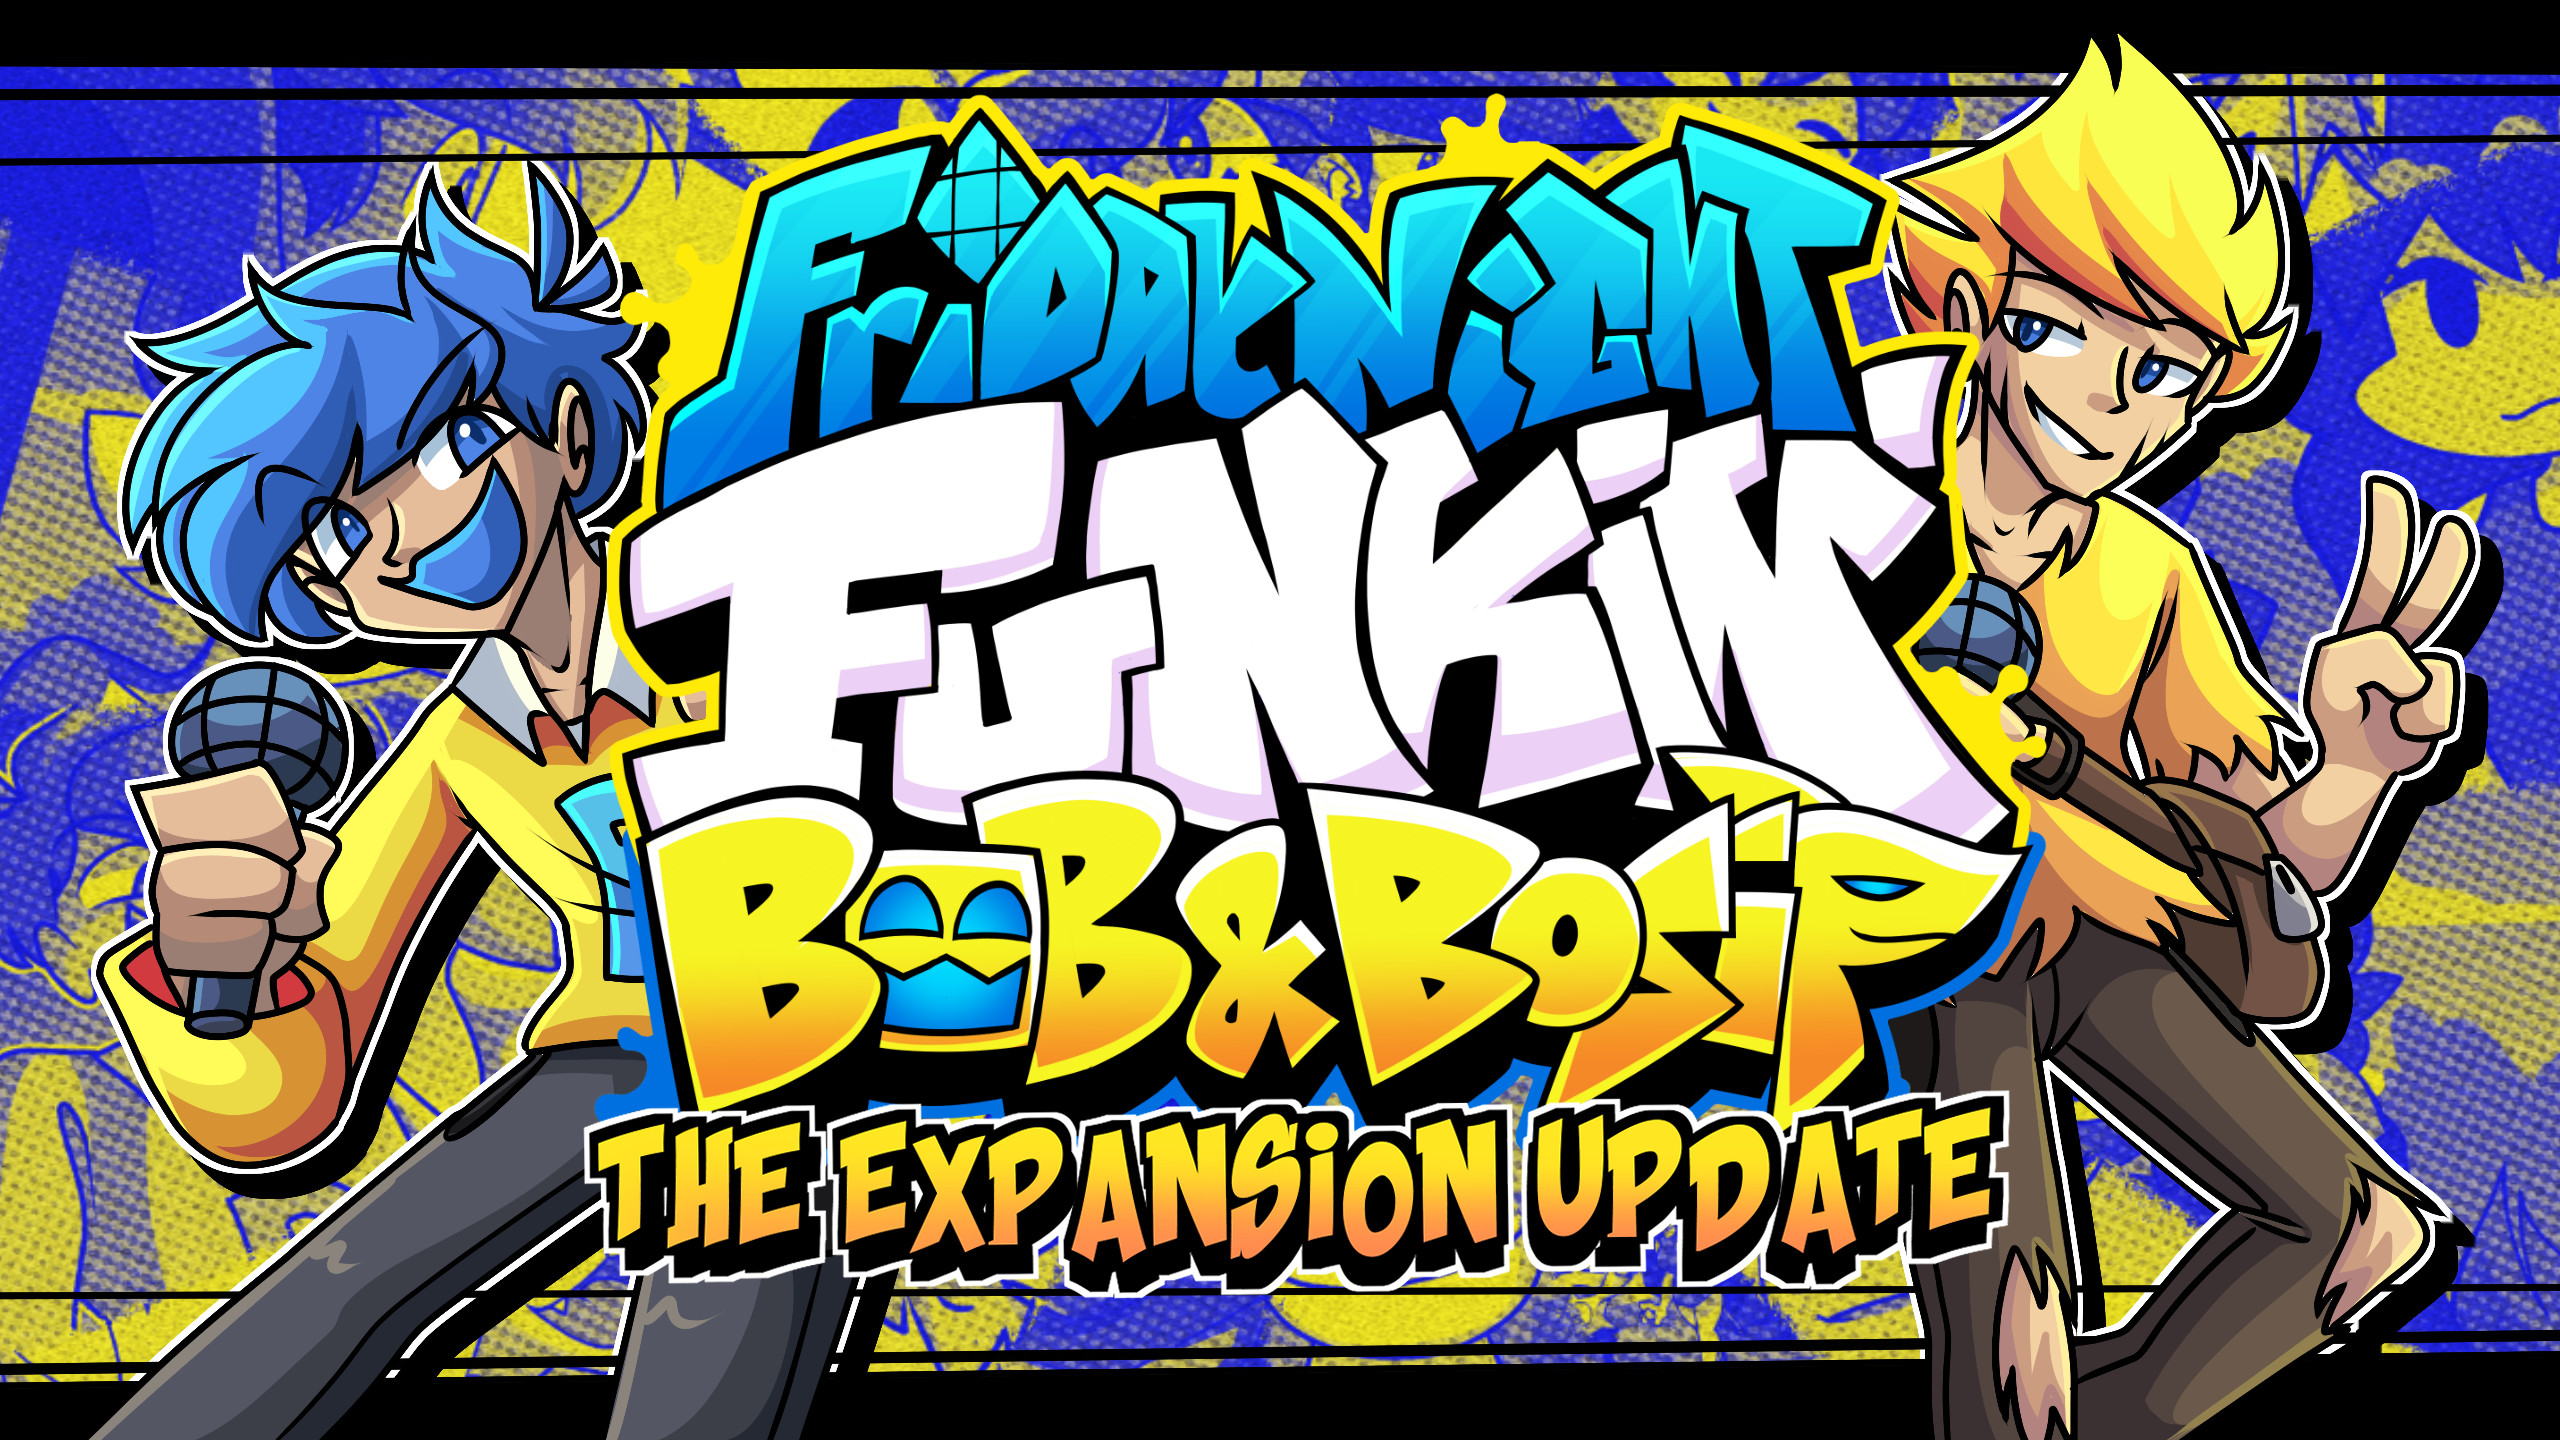 Vs Bob Bosip The Expansion Update Friday Night Funkin Mods